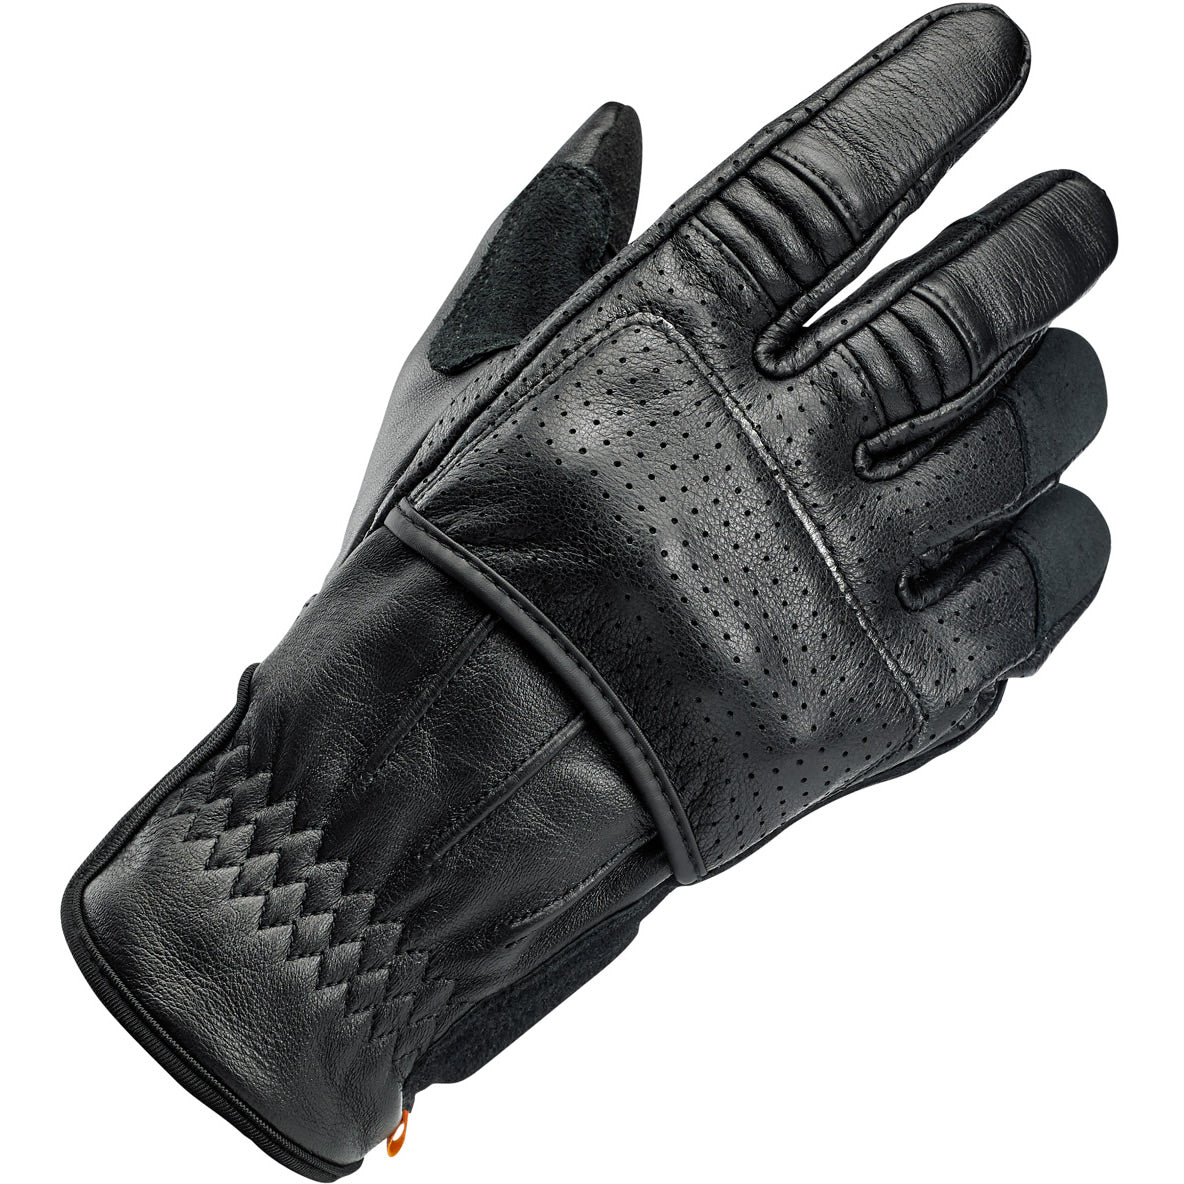 Biltwell Borrego Gloves - Black/Cement Medium